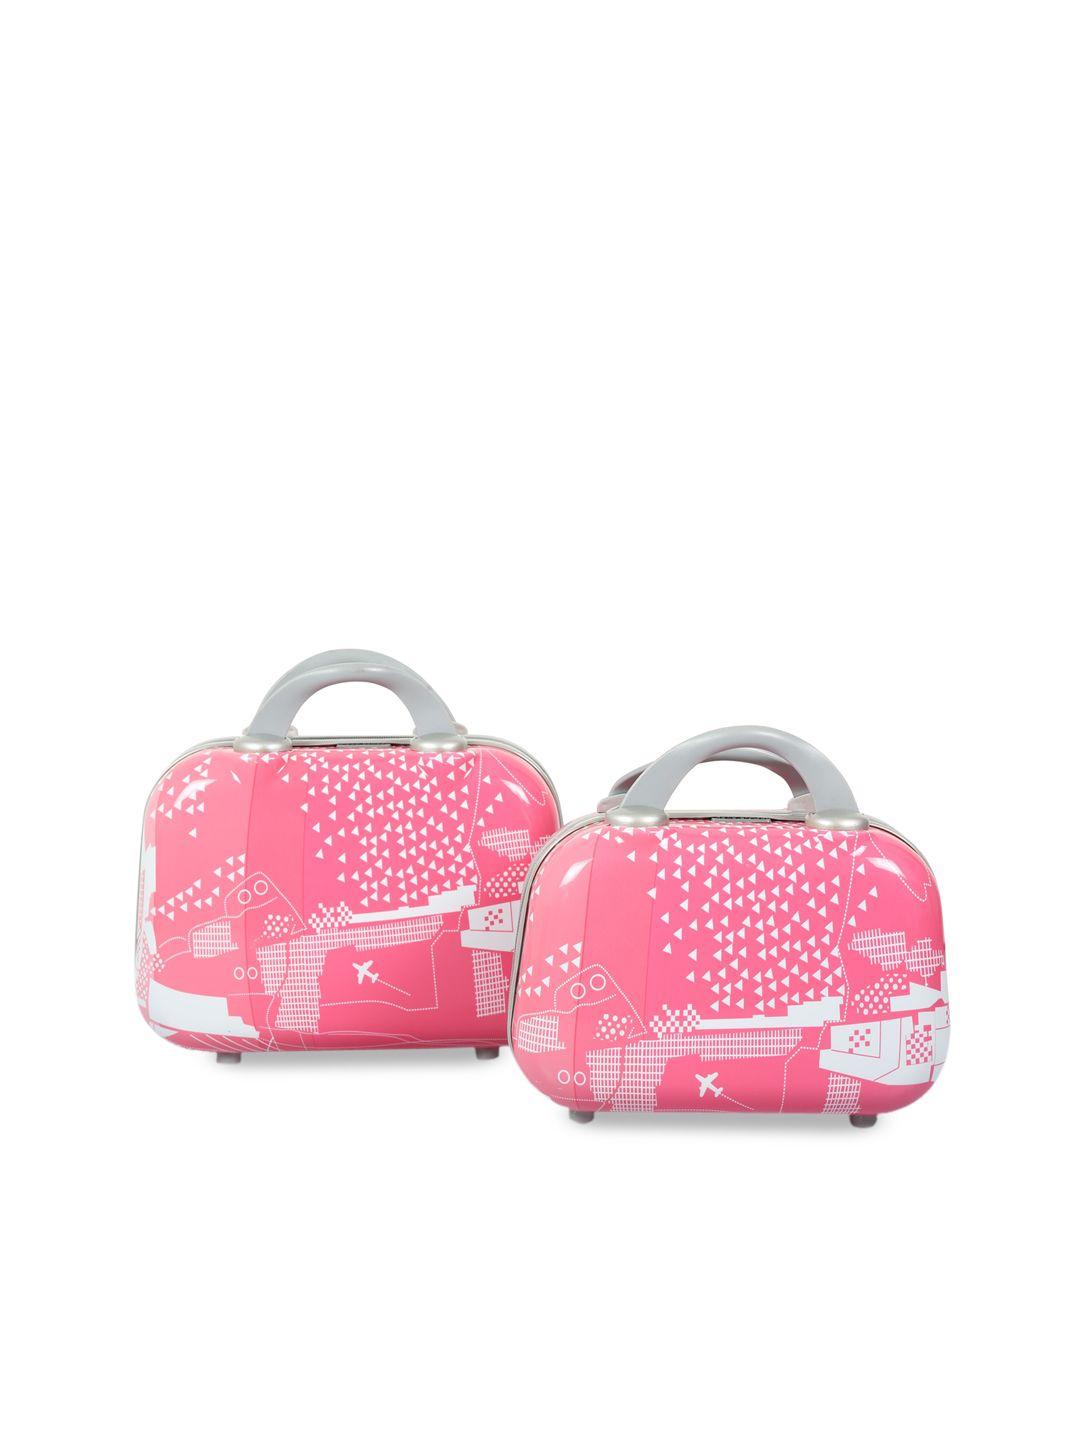 polo class 2pc set  travel vanity bag  - pink